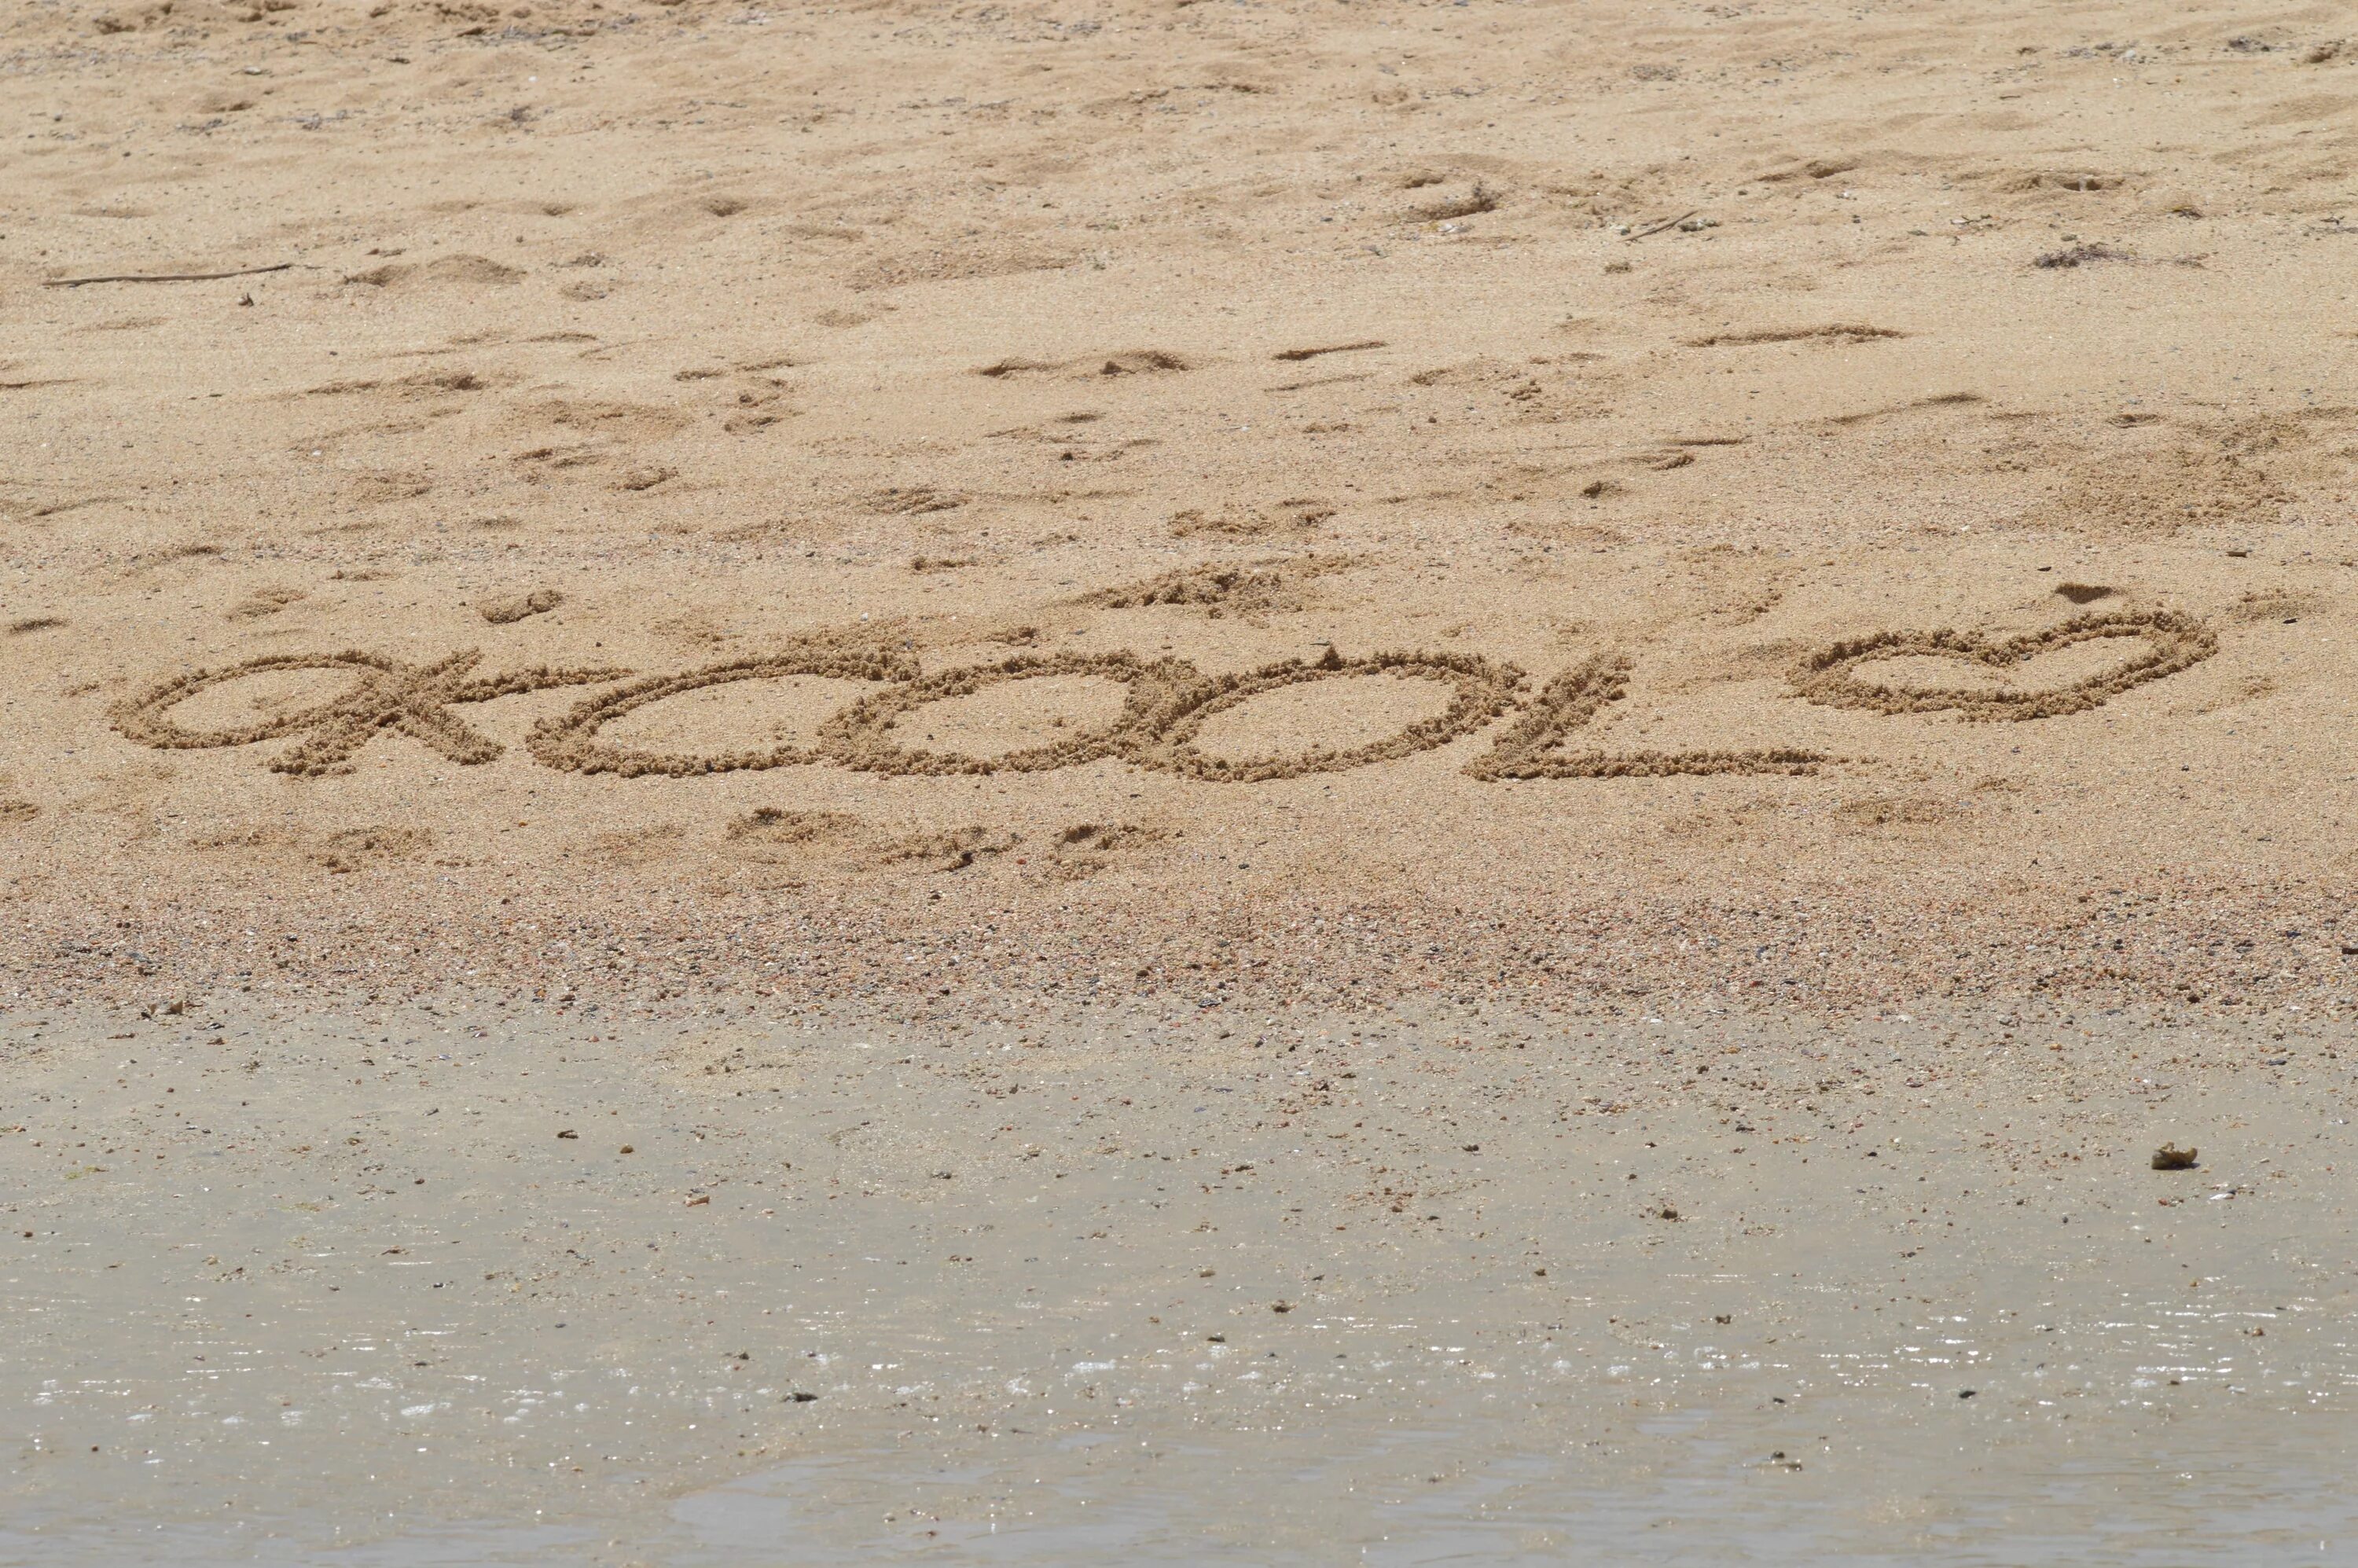 Море слов народ. Надпись на песке. Надпись на песке на море. Слова на песке. Слово море на побережье.